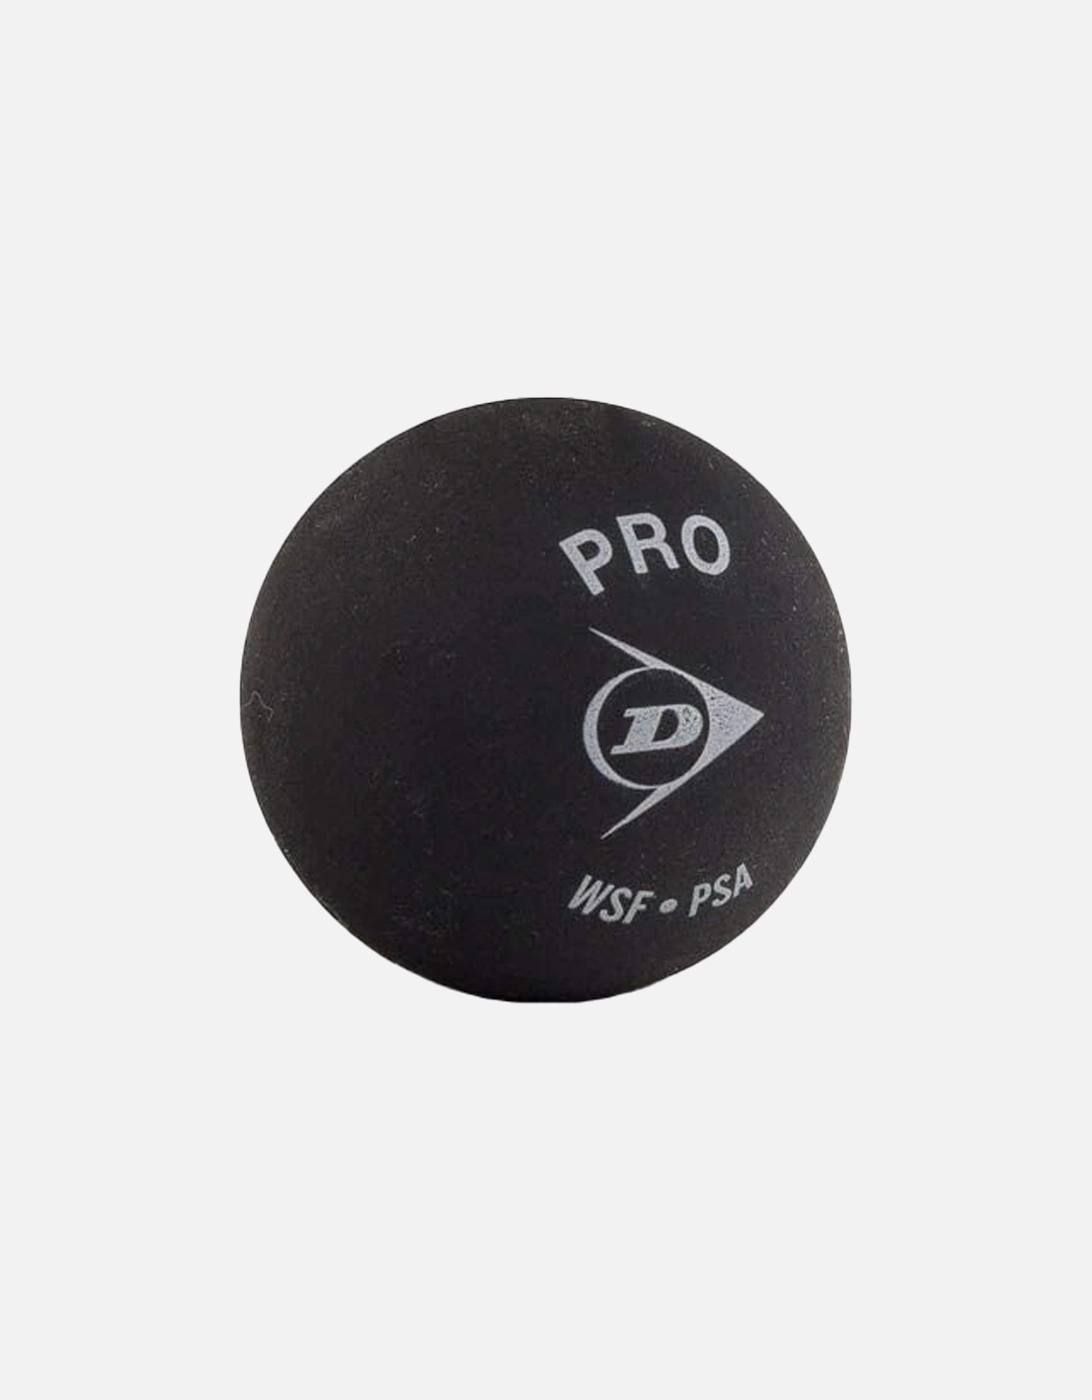 Pro Squash Balls (Pack of 12)